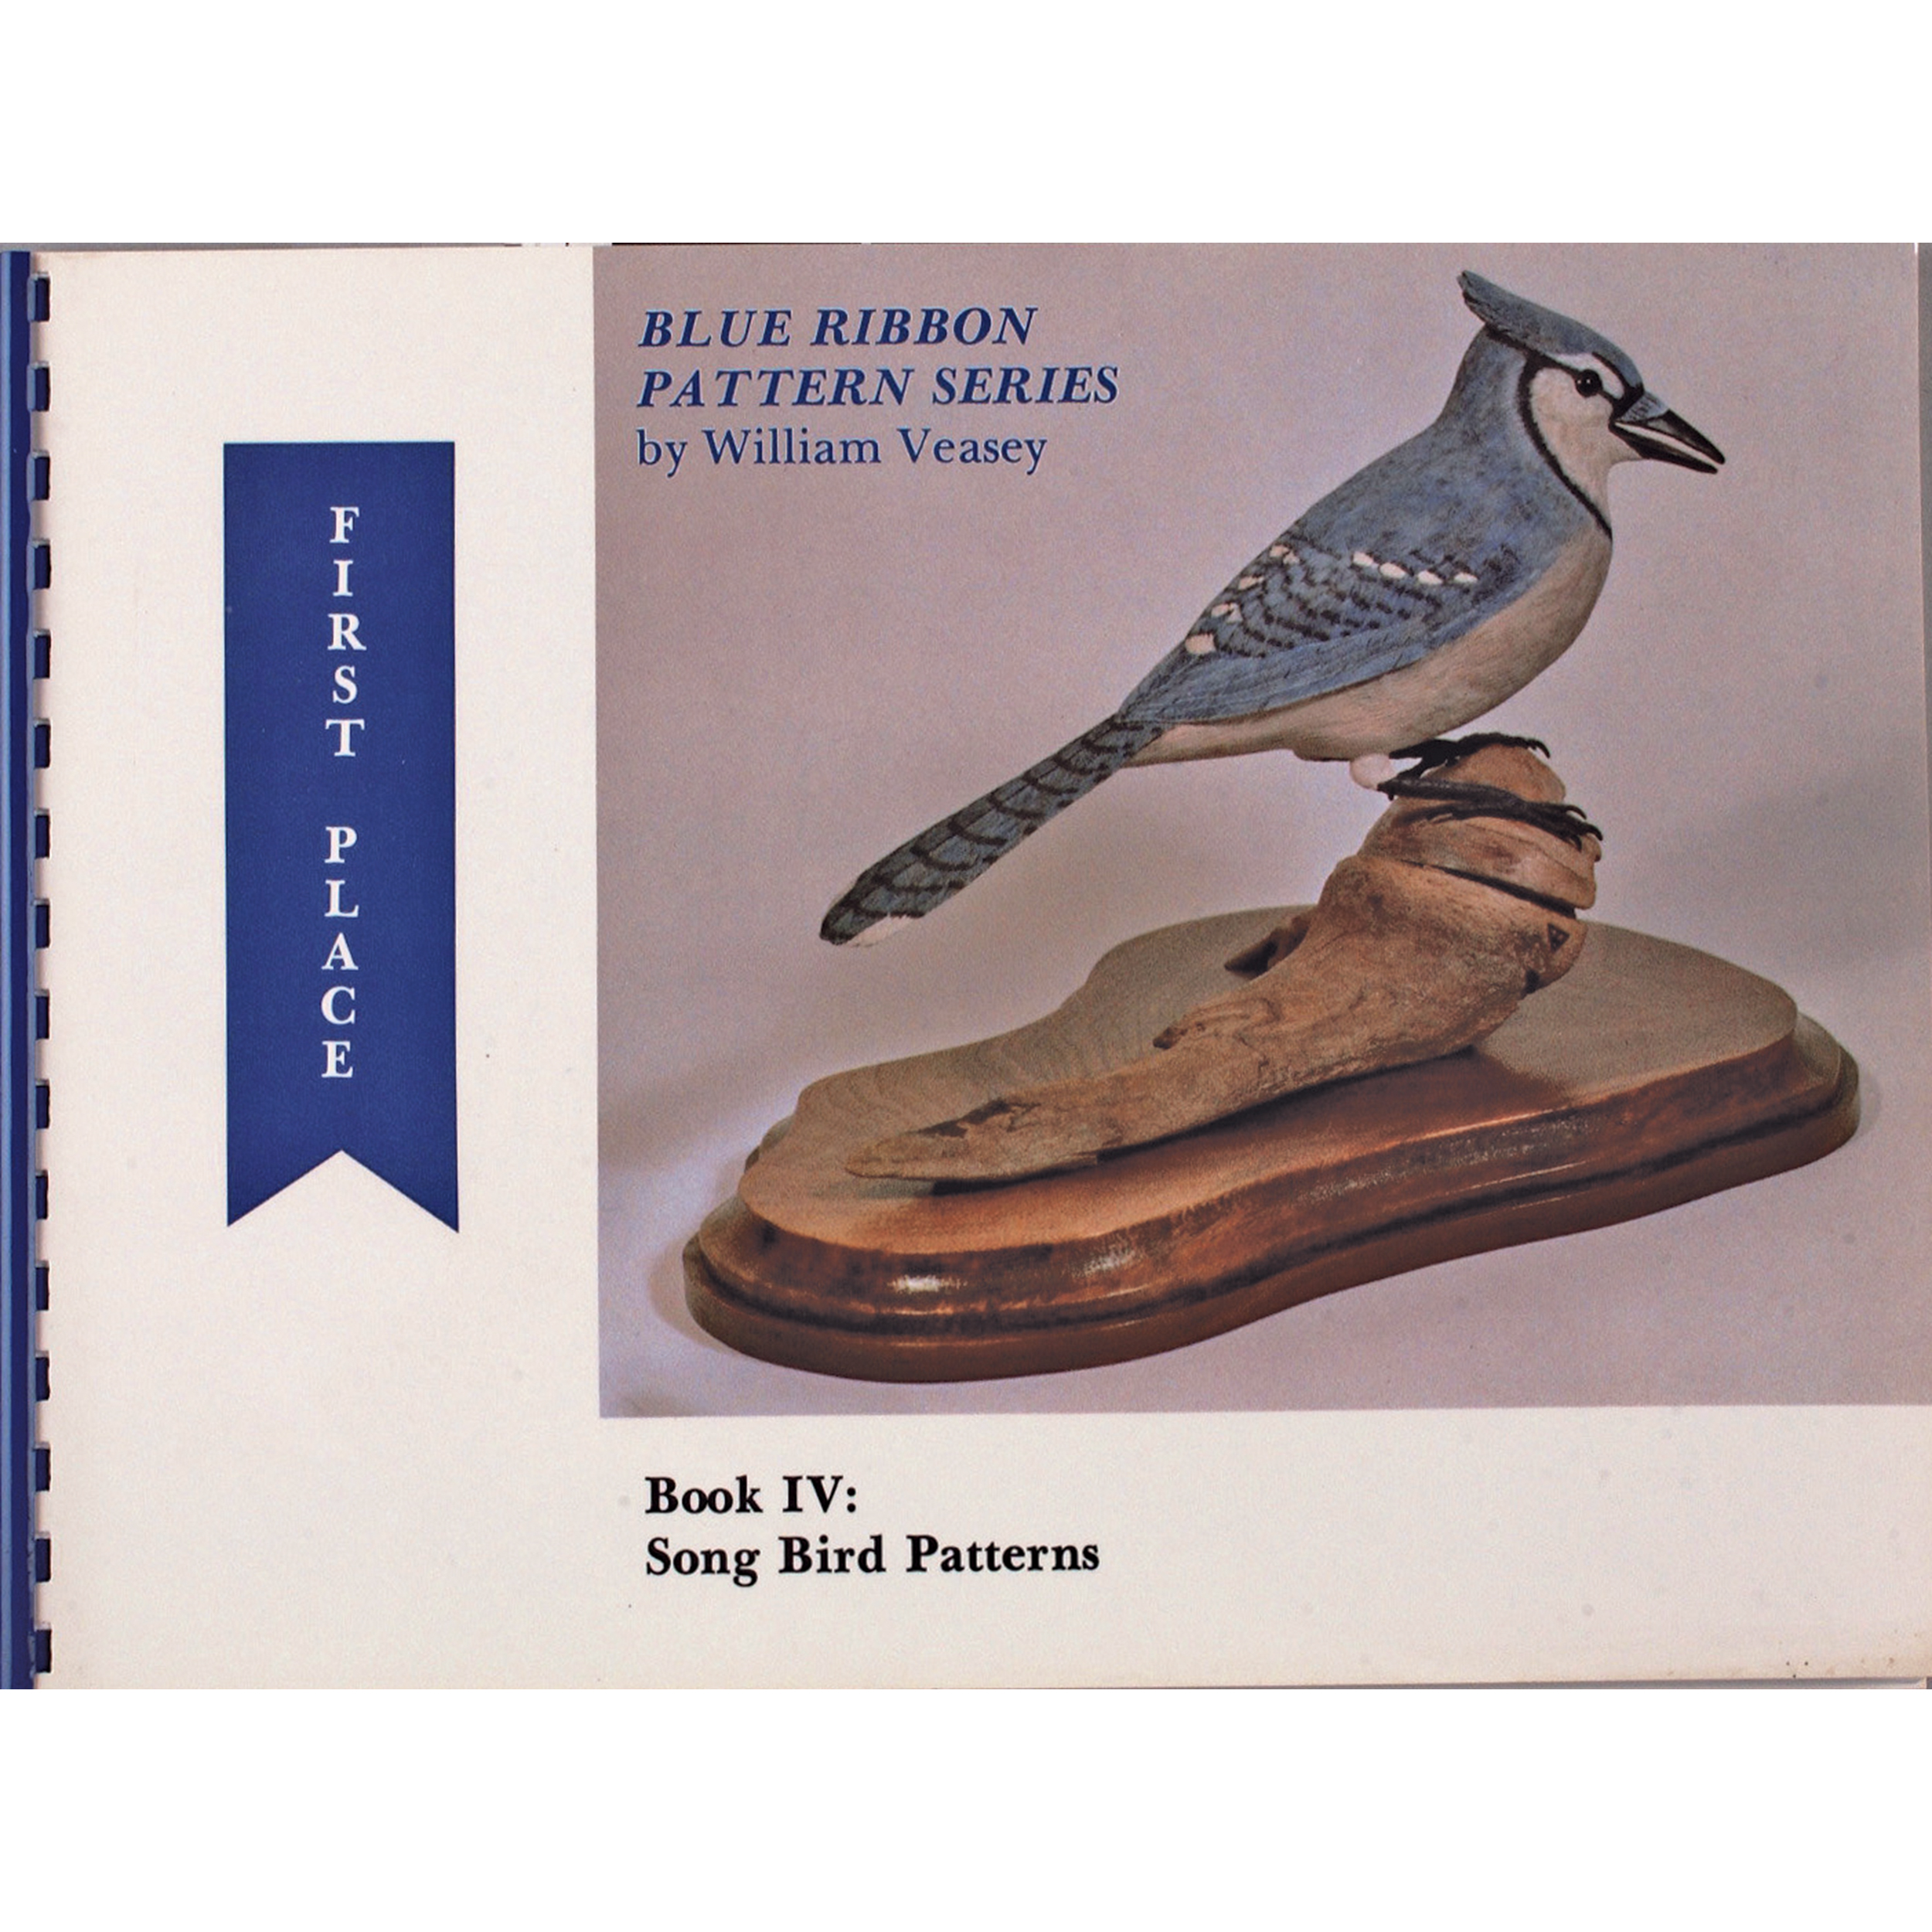 Blue Ribbon Pattern Series: Song Bird Patterns